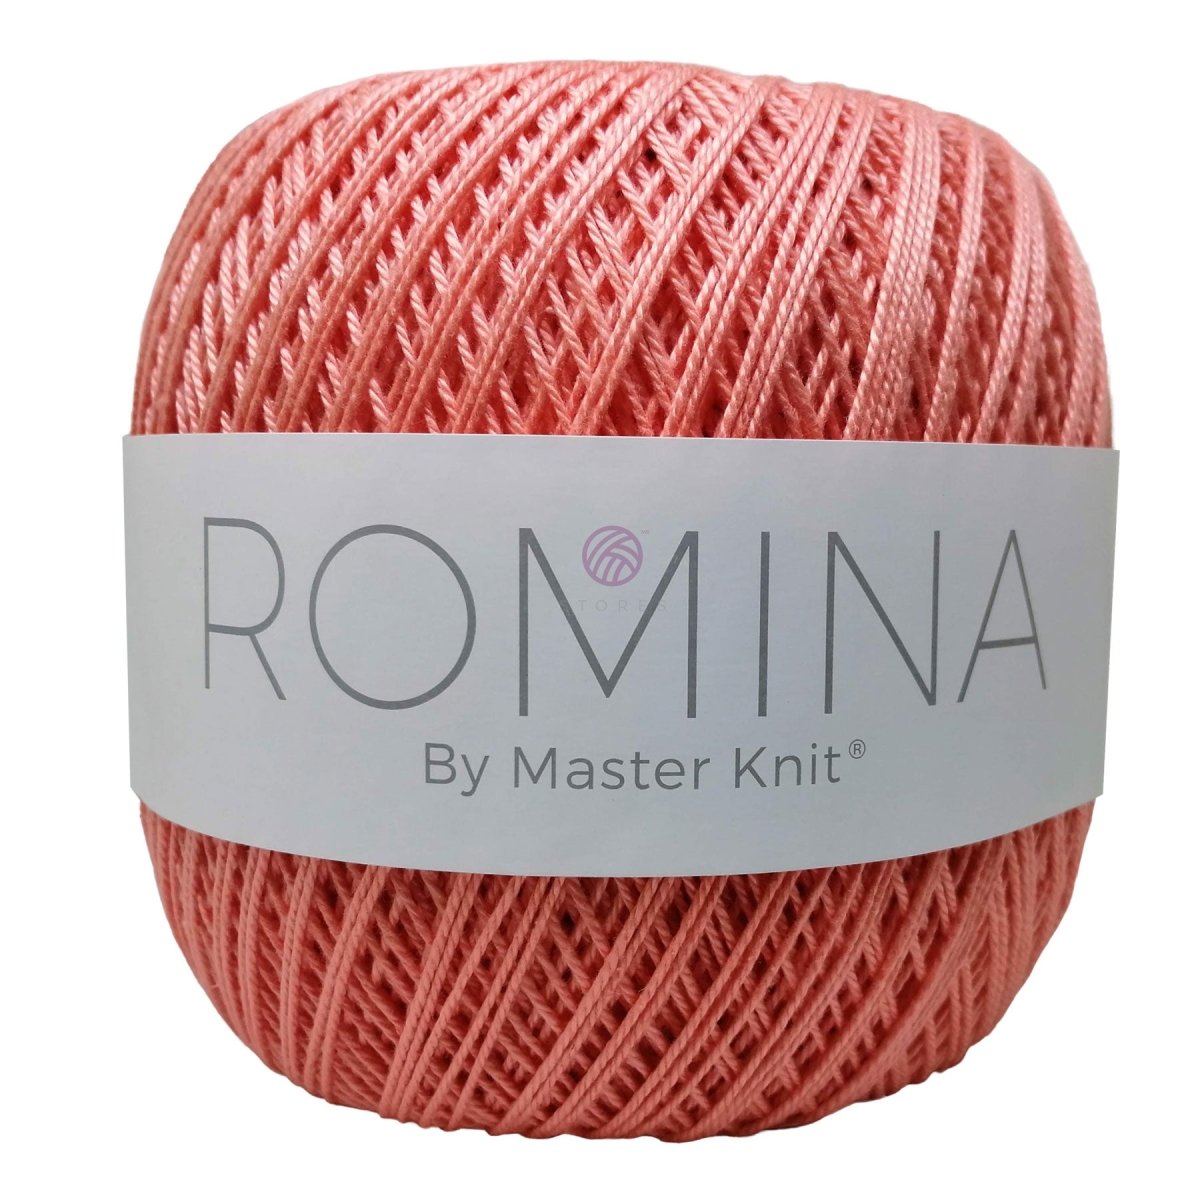 ROMINA - Crochetstores9335-115745051438456